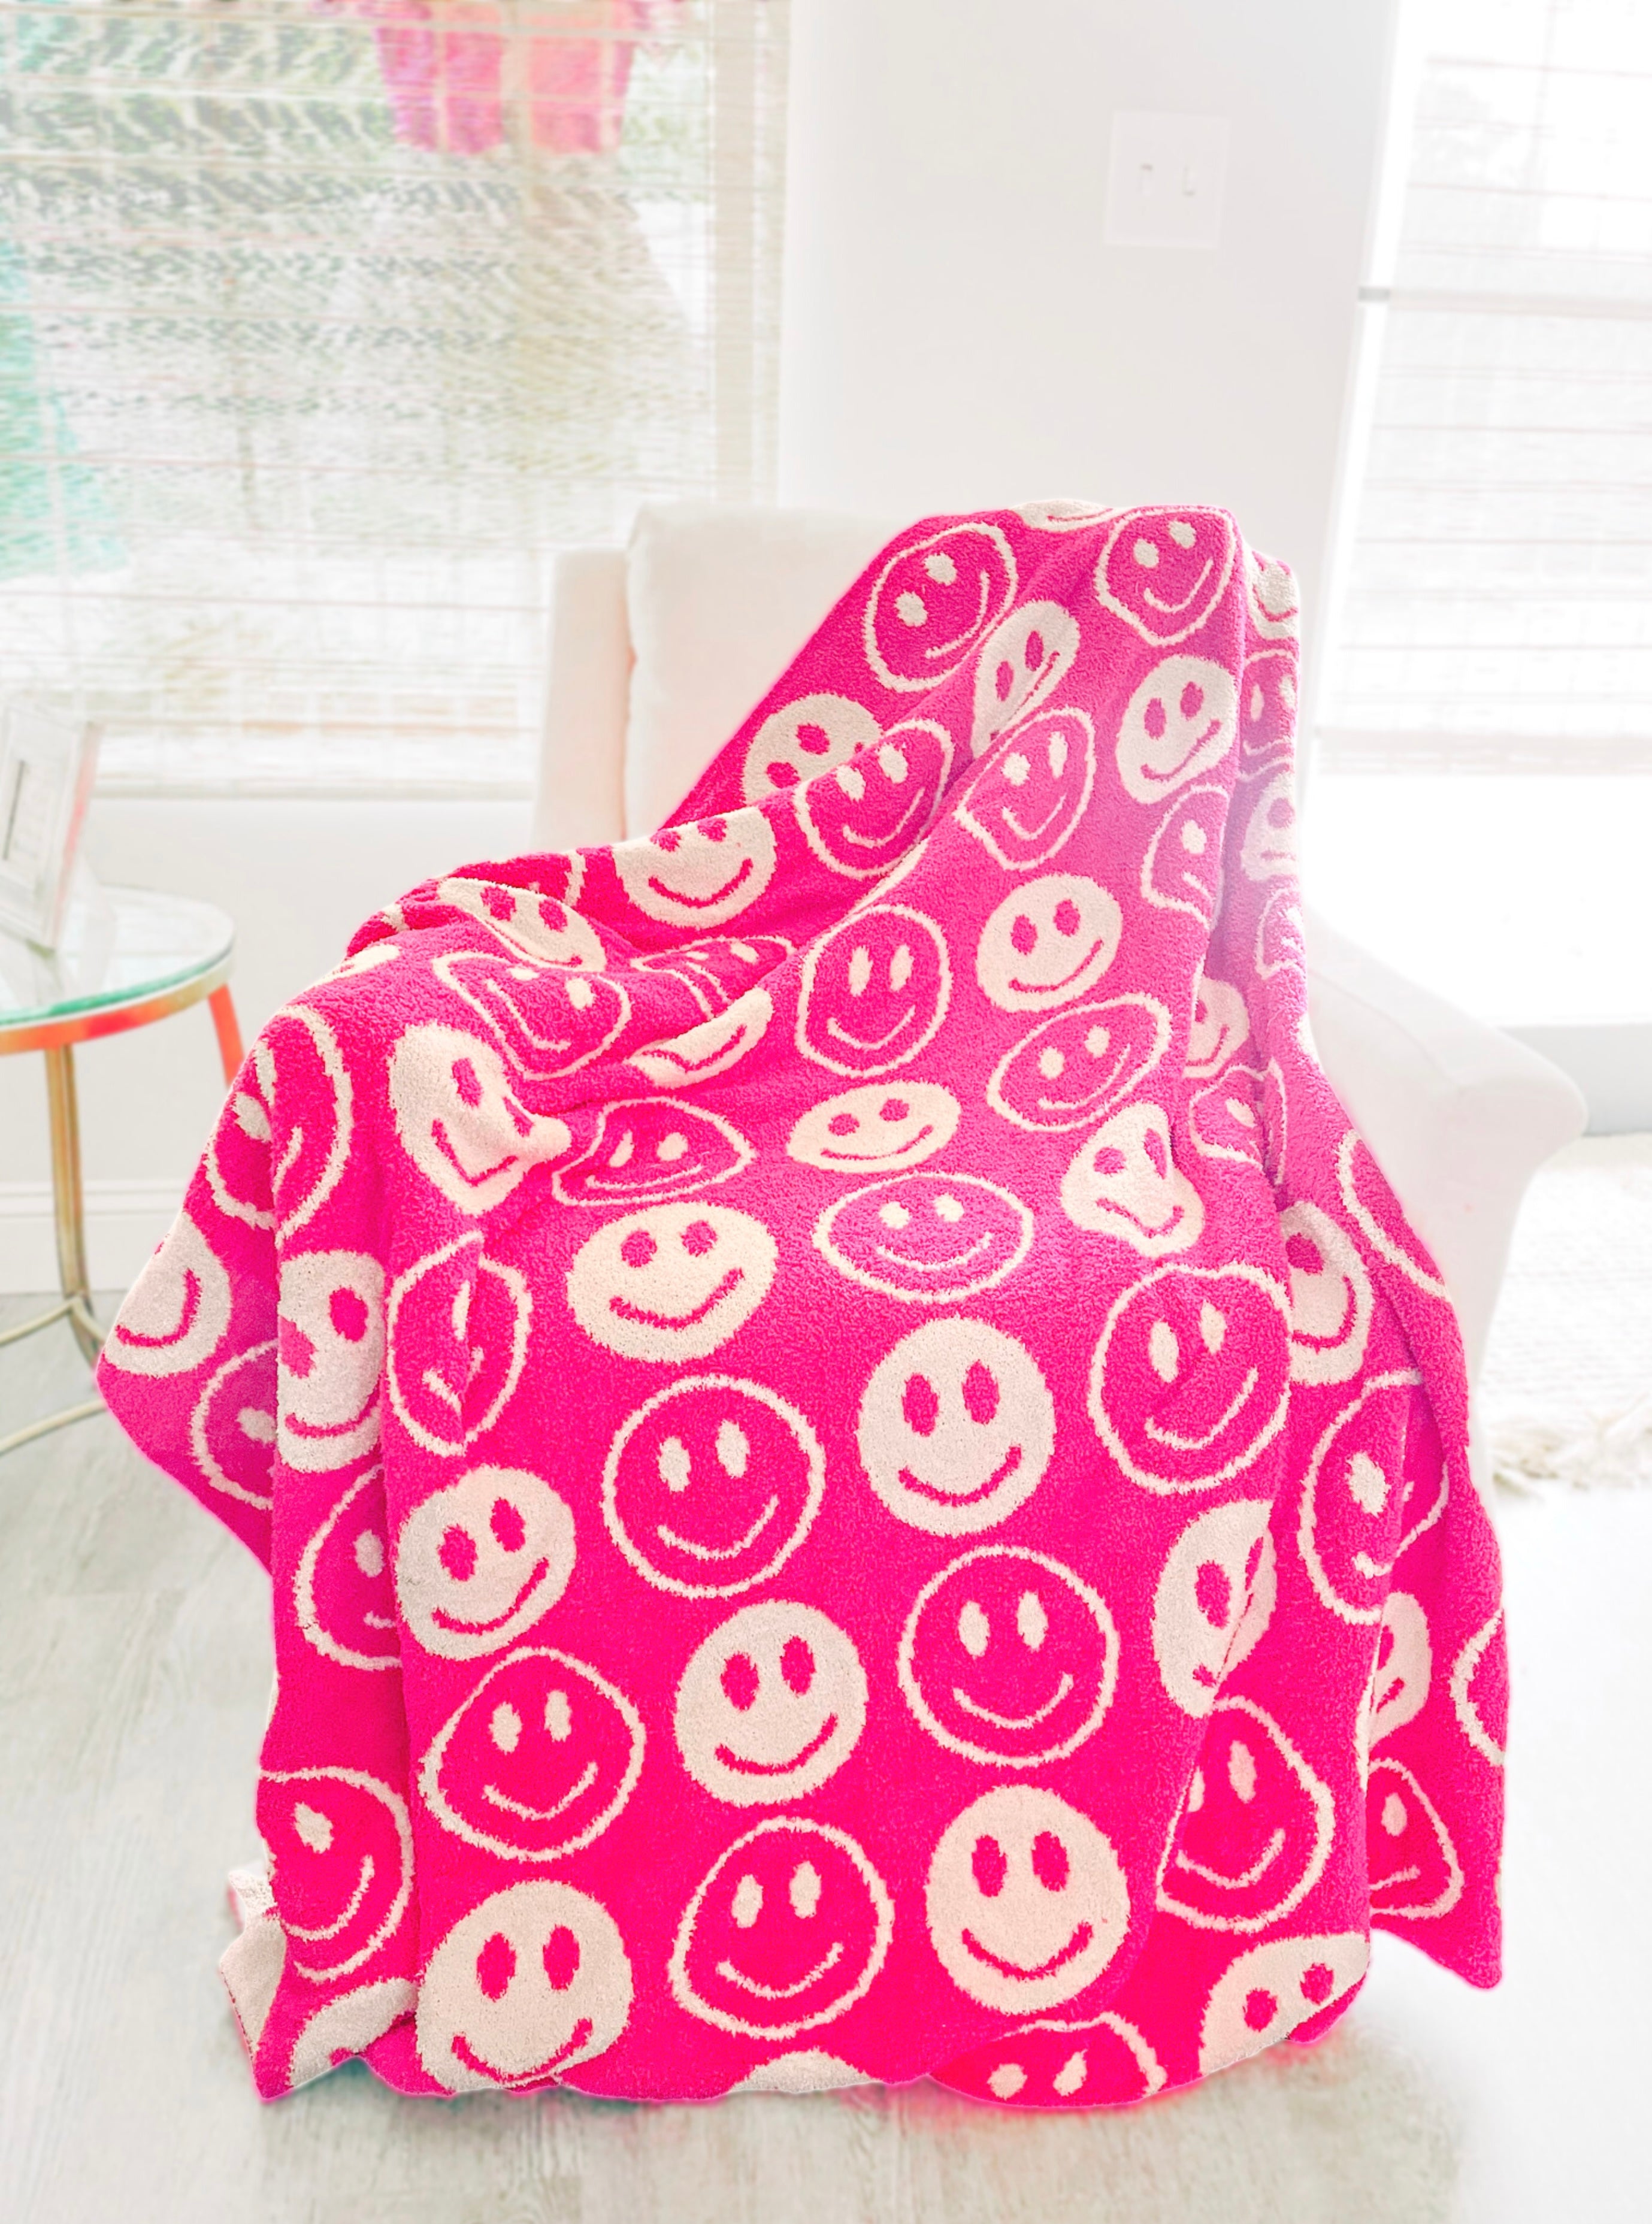 Pink XOXO Pet Blanket for Sale by mollsdesignss